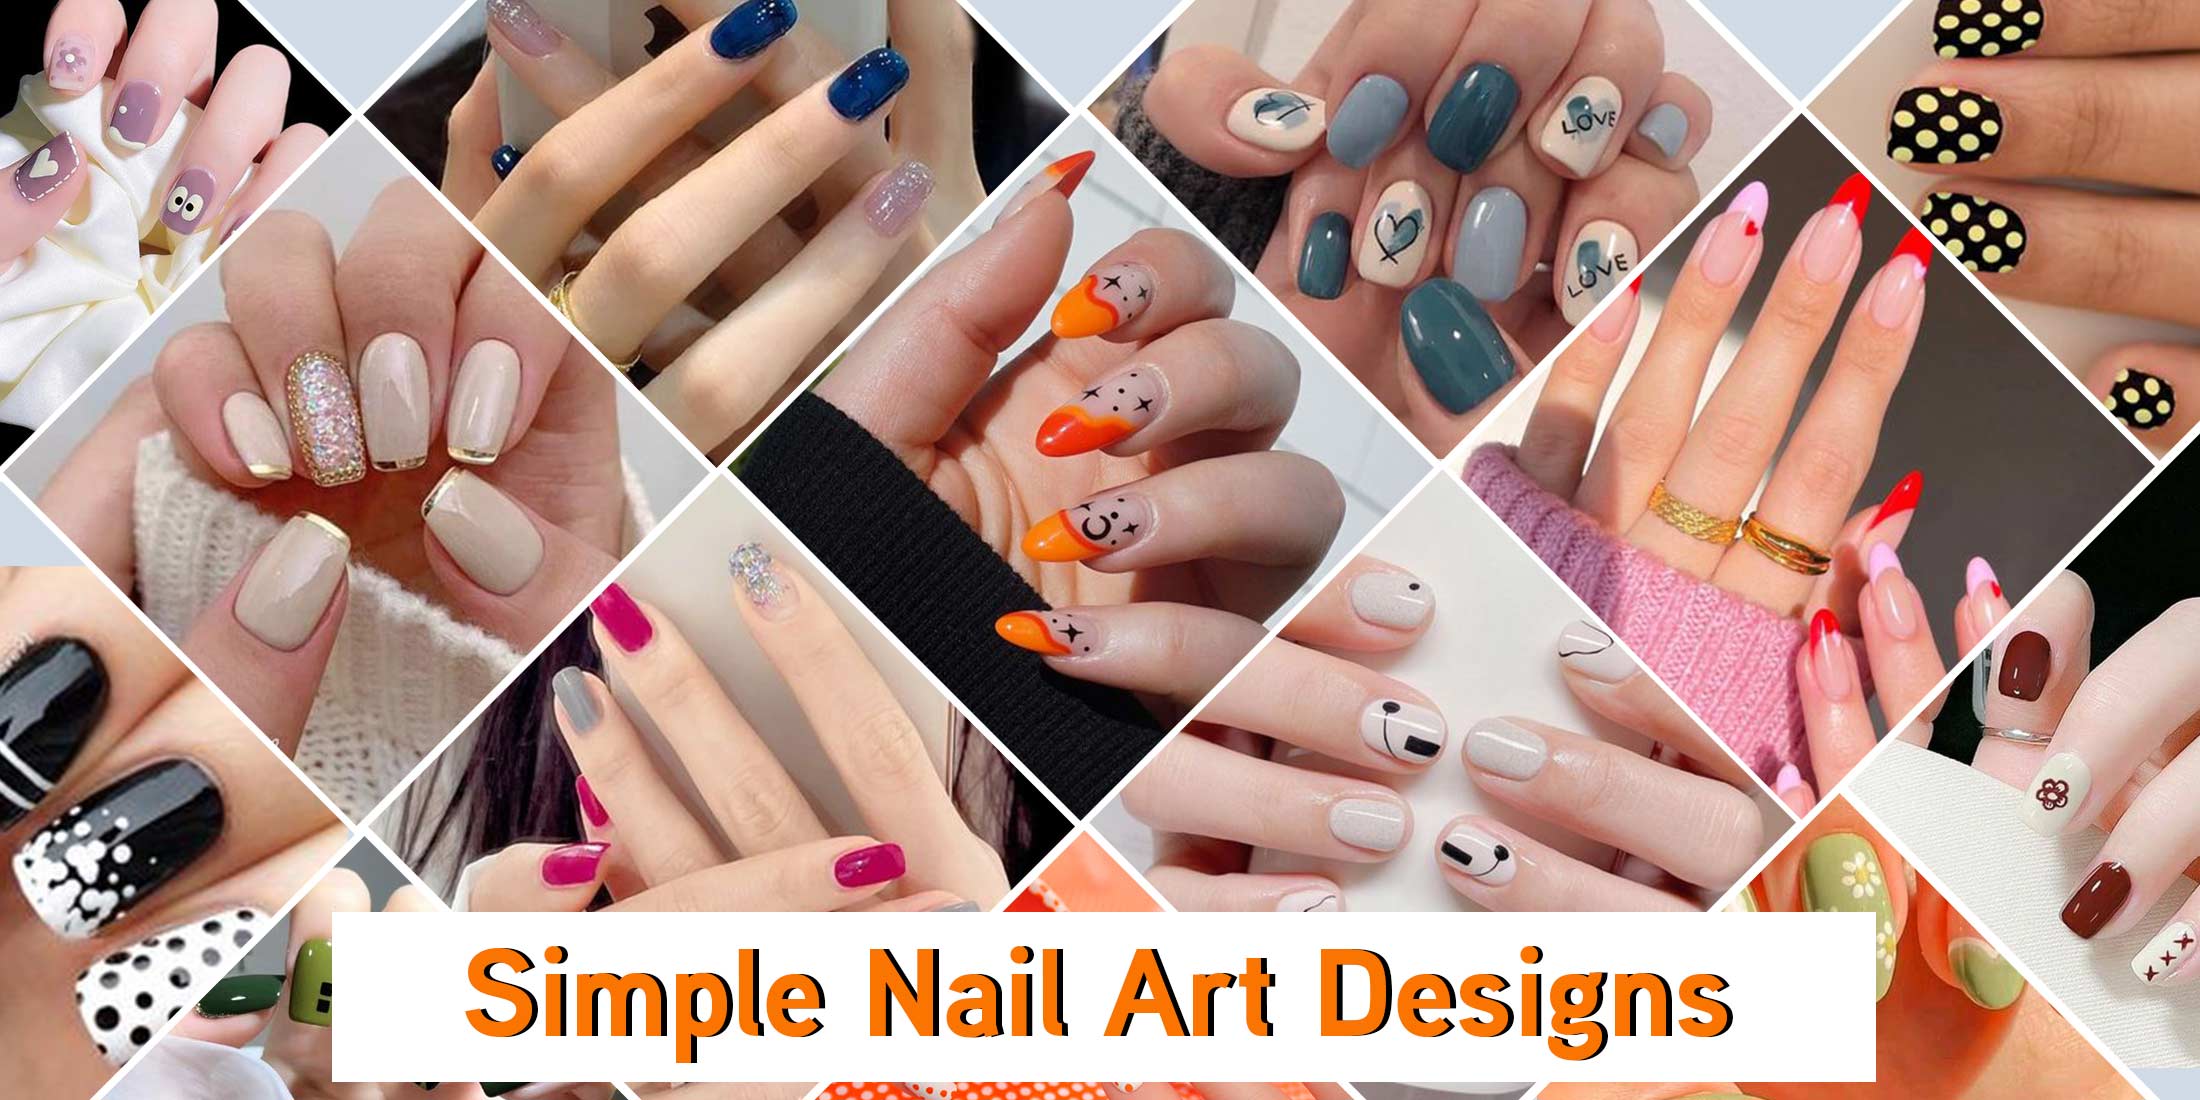 Simple Nail Art Designs Header 1